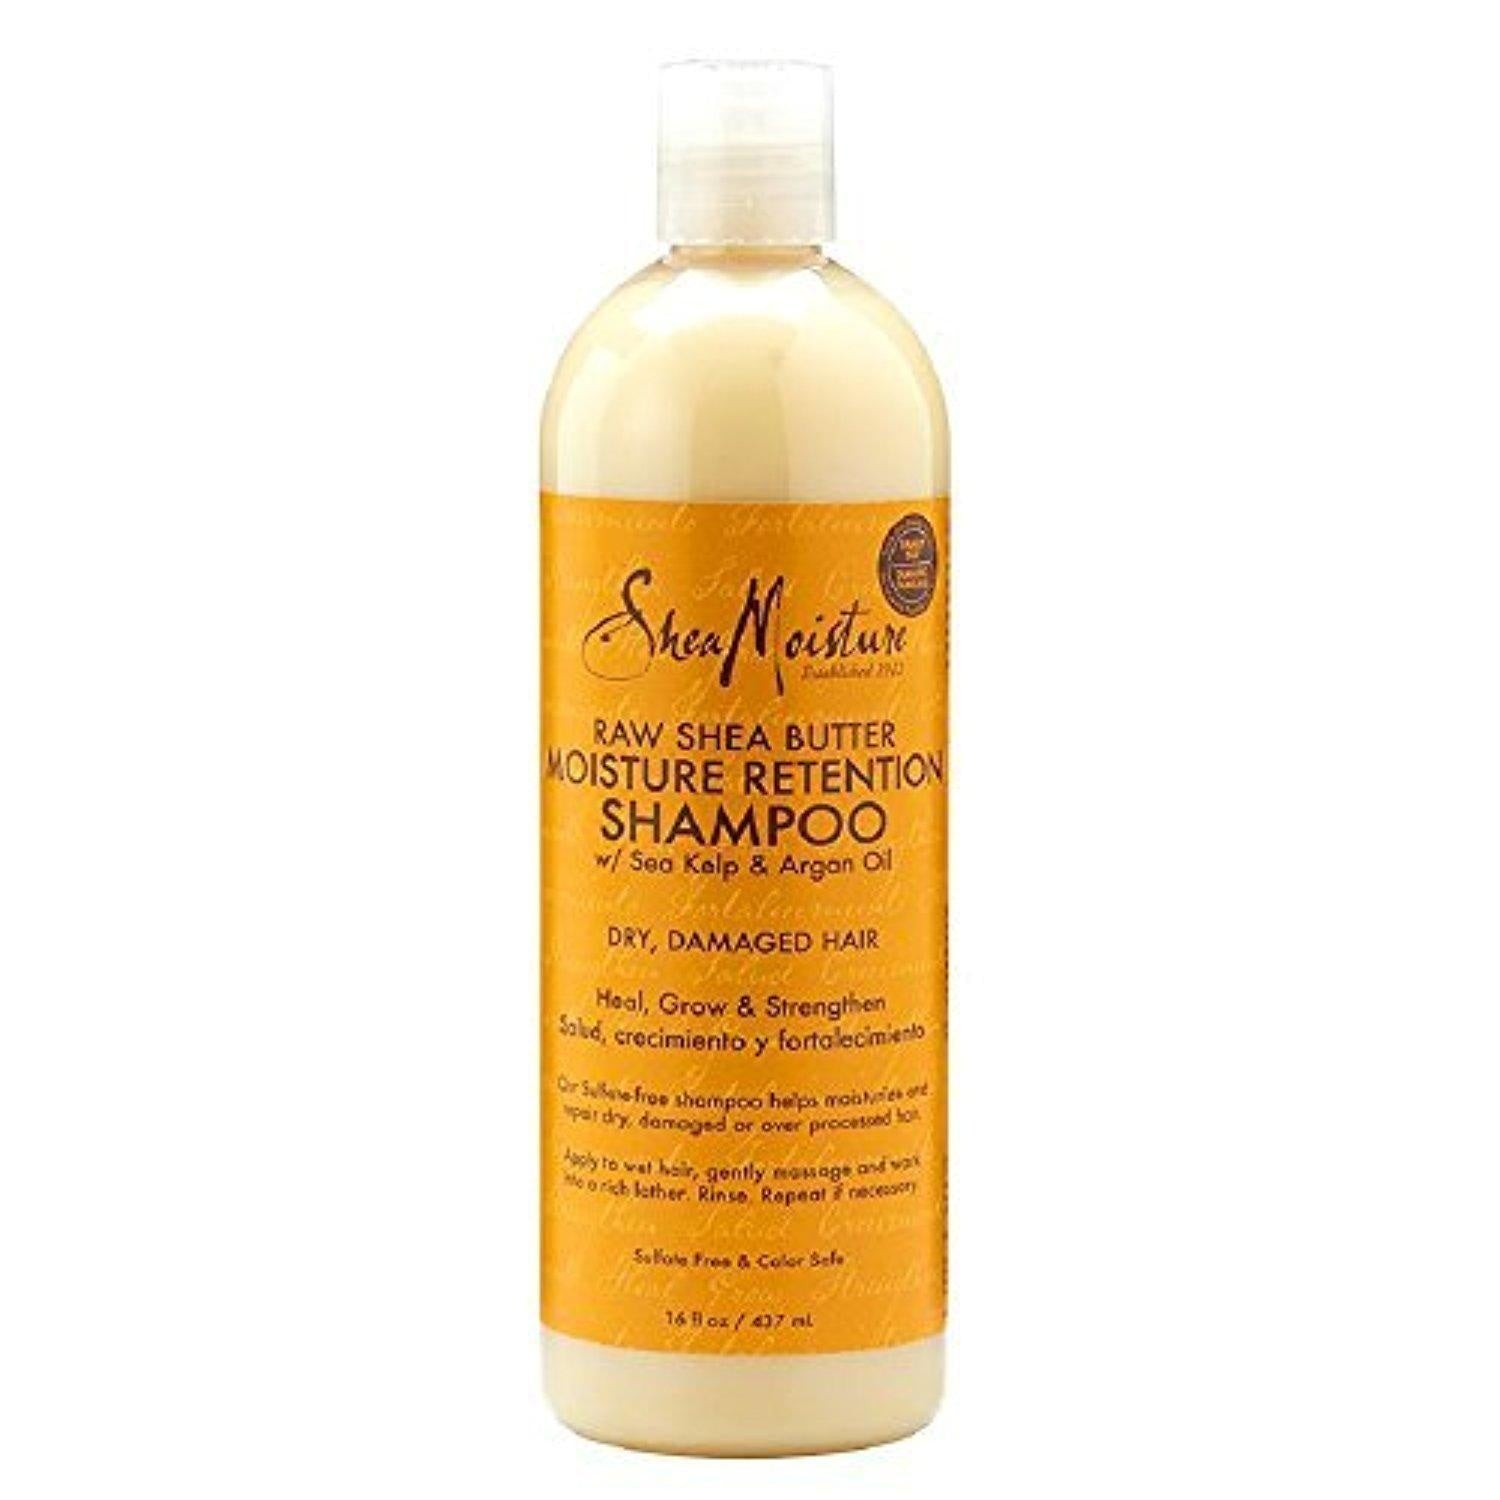 Shea Moisture - Raw Shea Butter Moisture Retention Shampoo  16fl/ 437 ml